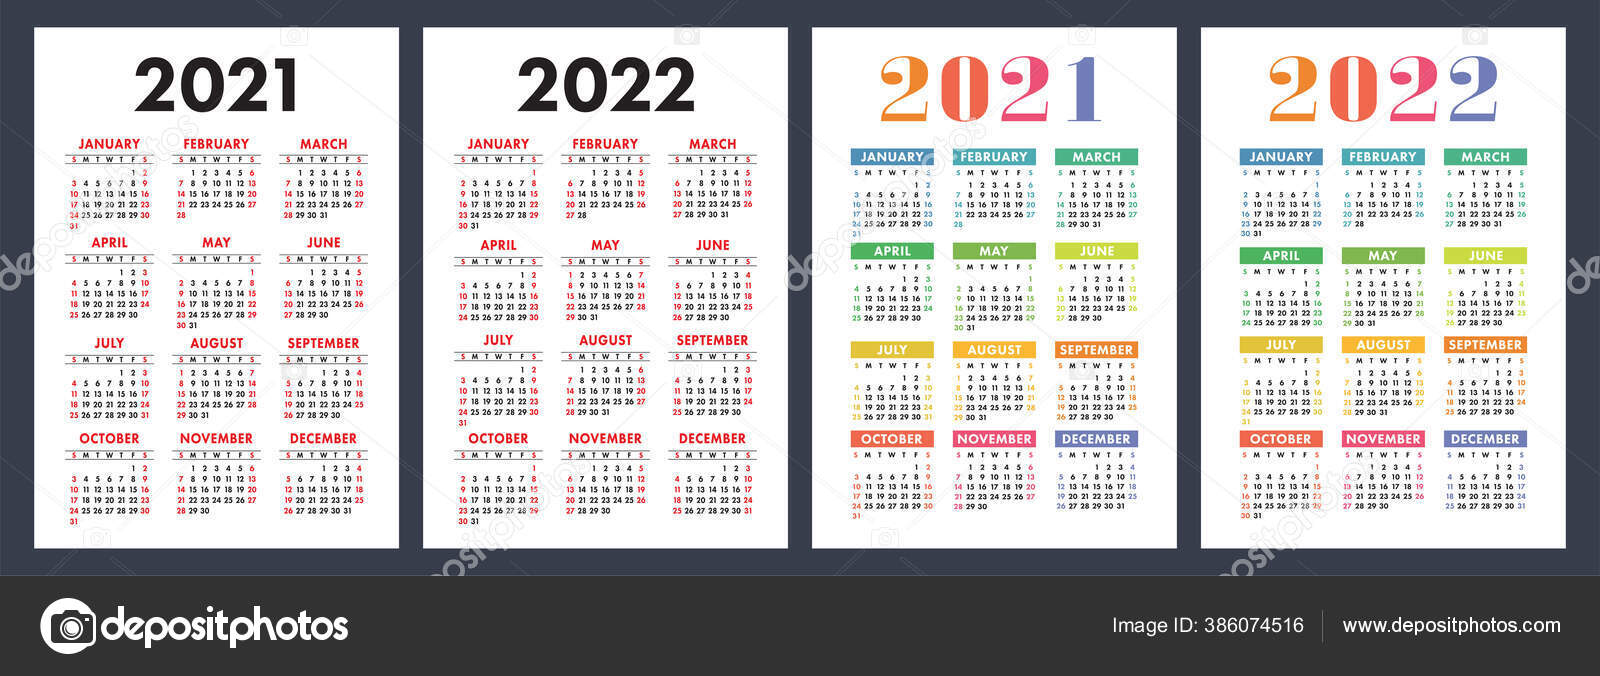 Get Limbah Lunak Organik 2021 2022 2023 Images